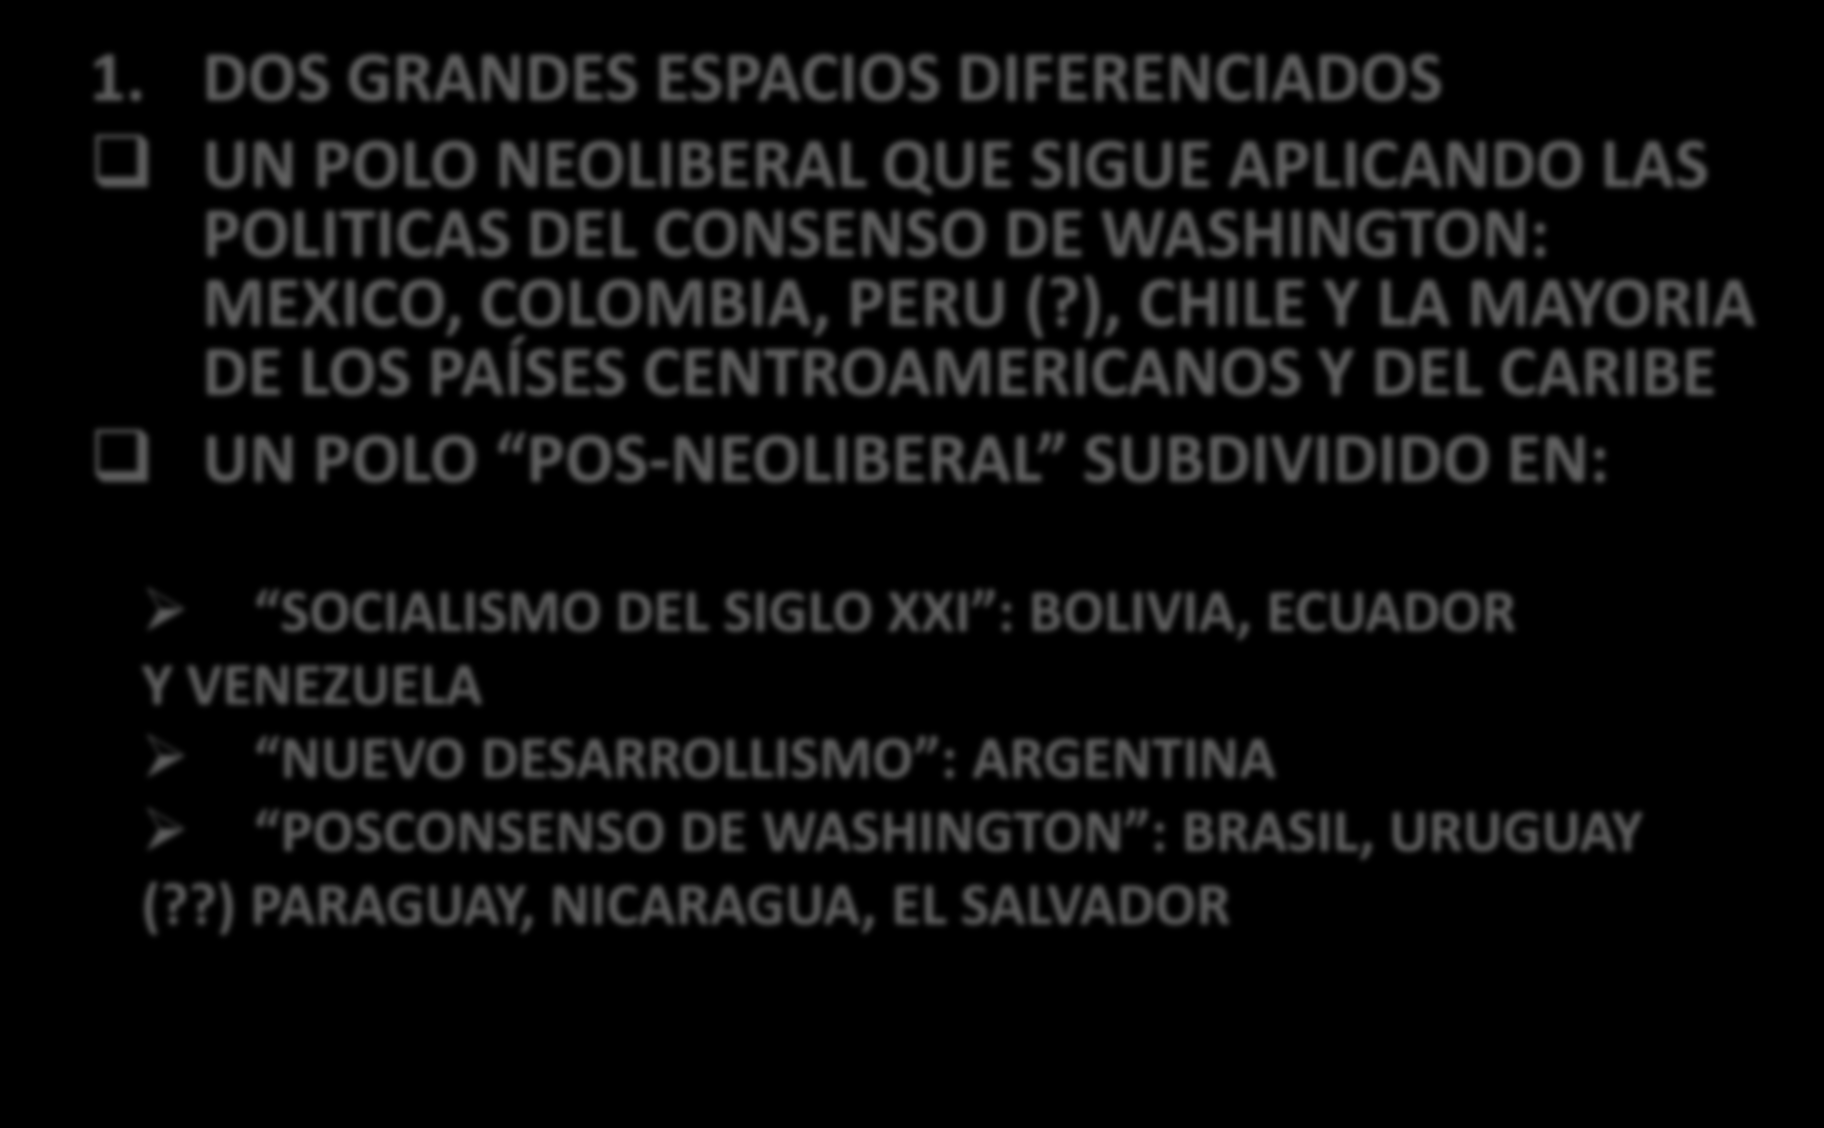 AMERICA LATINA HOY 1. DOS GRANDES ESPACIOS DIFERENCIADOS UN POLO NEOLIBERAL QUE SIGUE APLICANDO LAS POLITICAS DEL CONSENSO DE WASHINGTON: MEXICO, COLOMBIA, PERU (?